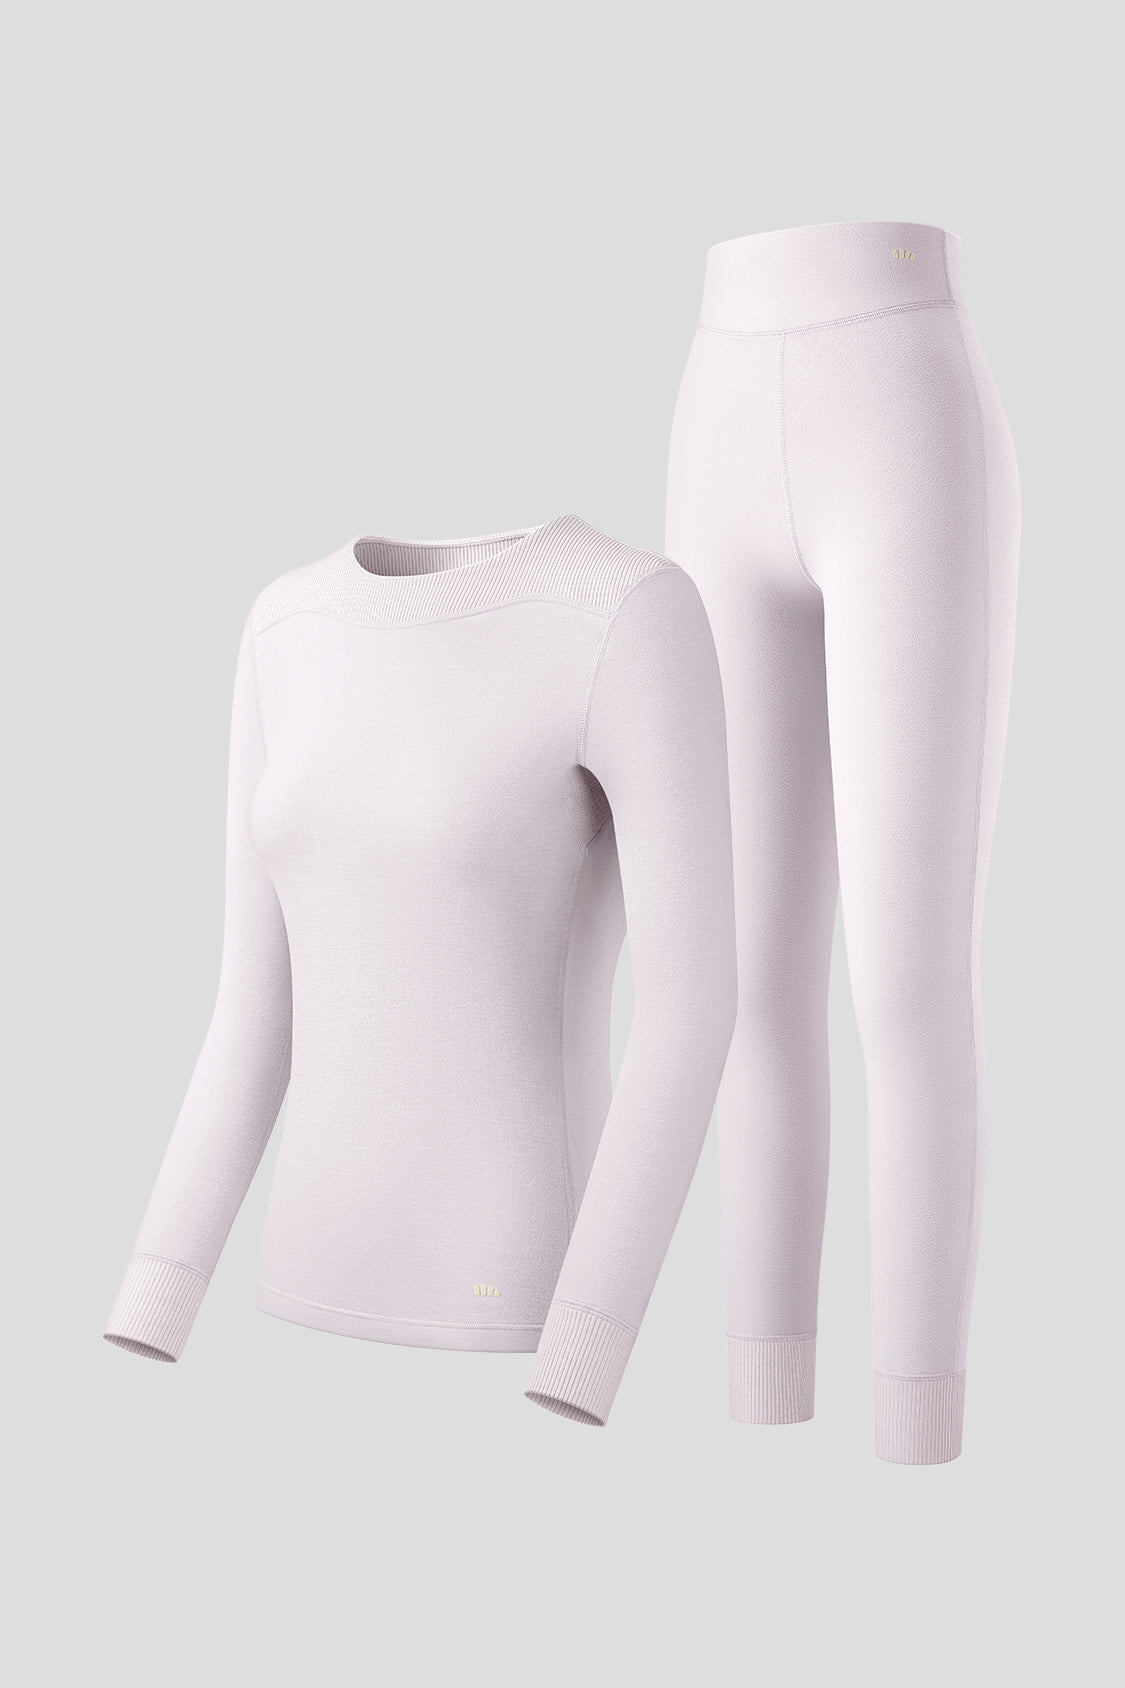 ViCherub Thermal Underwear Set for Women Long Johns Base Layer Fleece Lined  Top Bottom